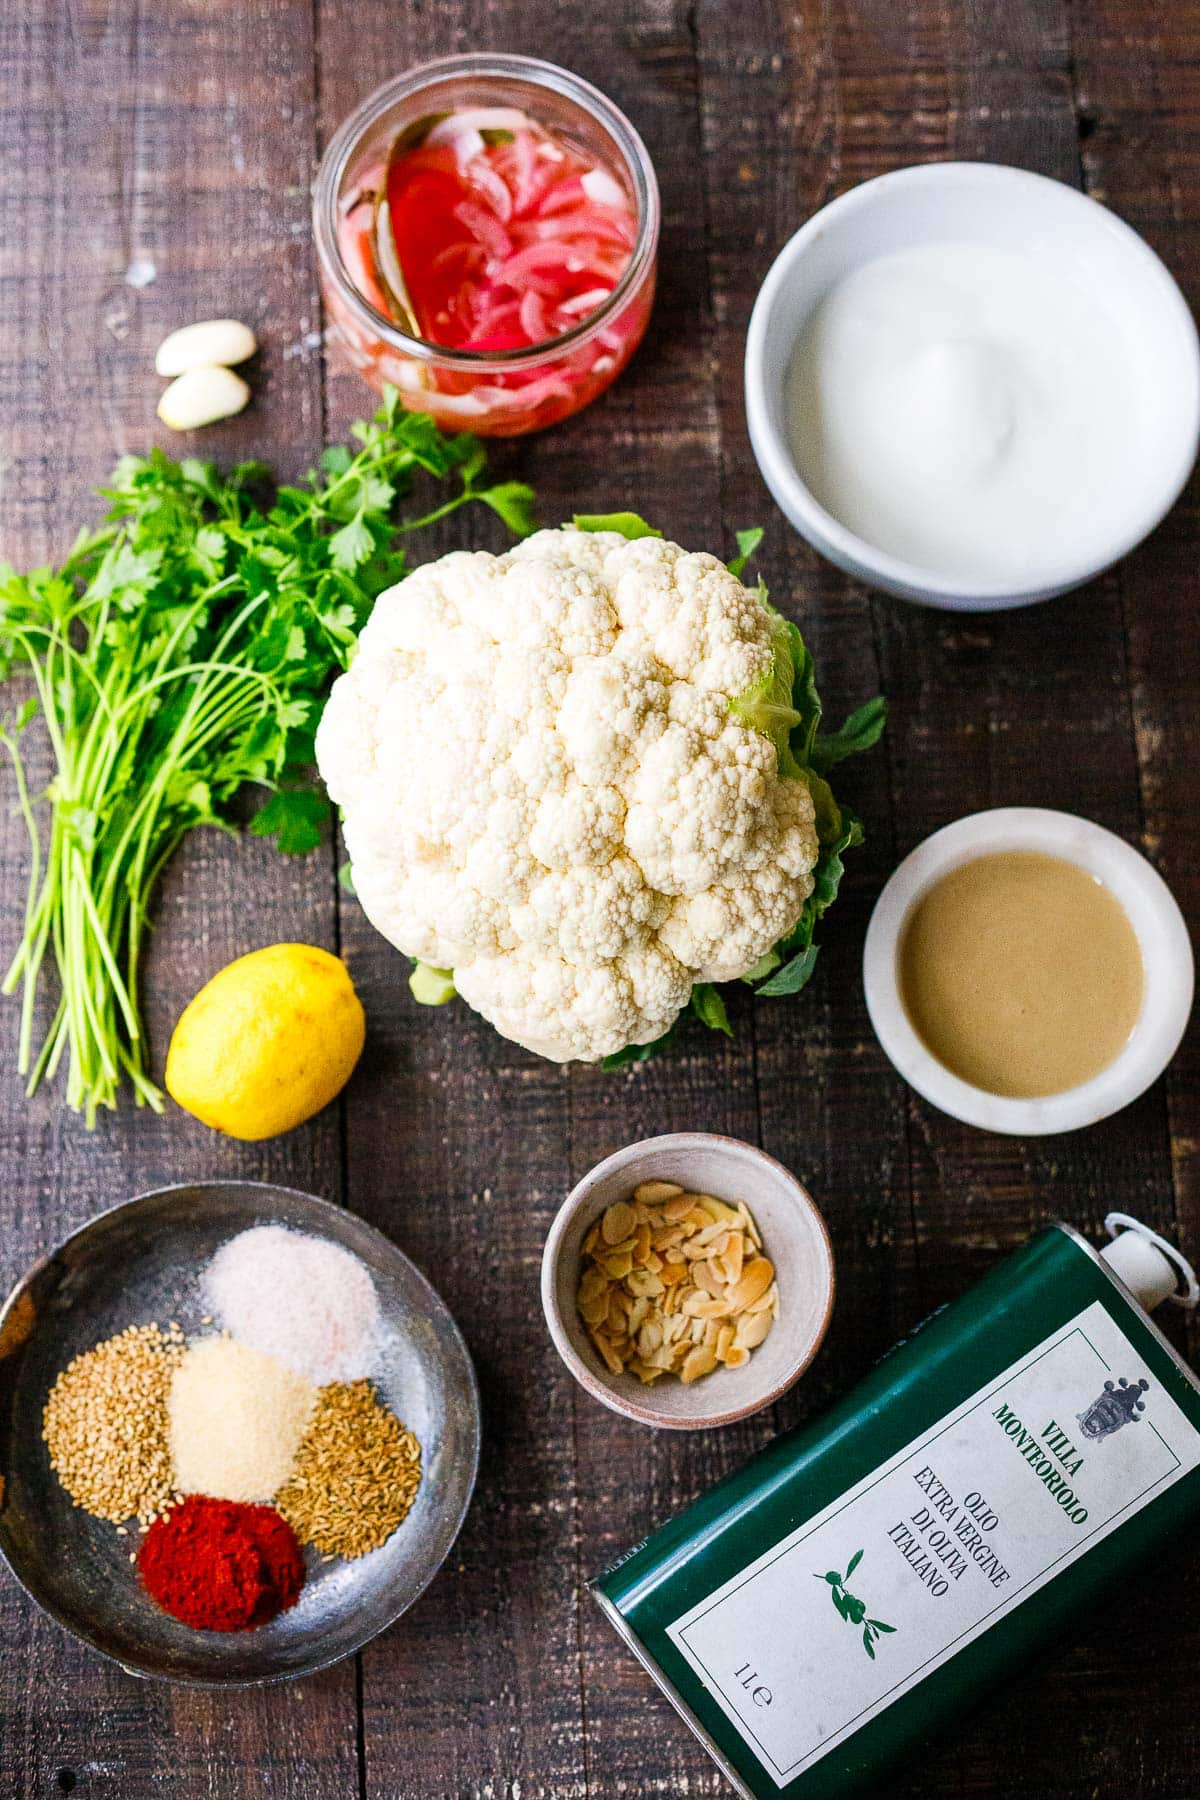 ingredients for crispy cauliflower laid out on wood surface - cauliflower head, yogurt, tahini, pickled onions, garlic cloves, parsley, lemon, almonds, spices, oil. 